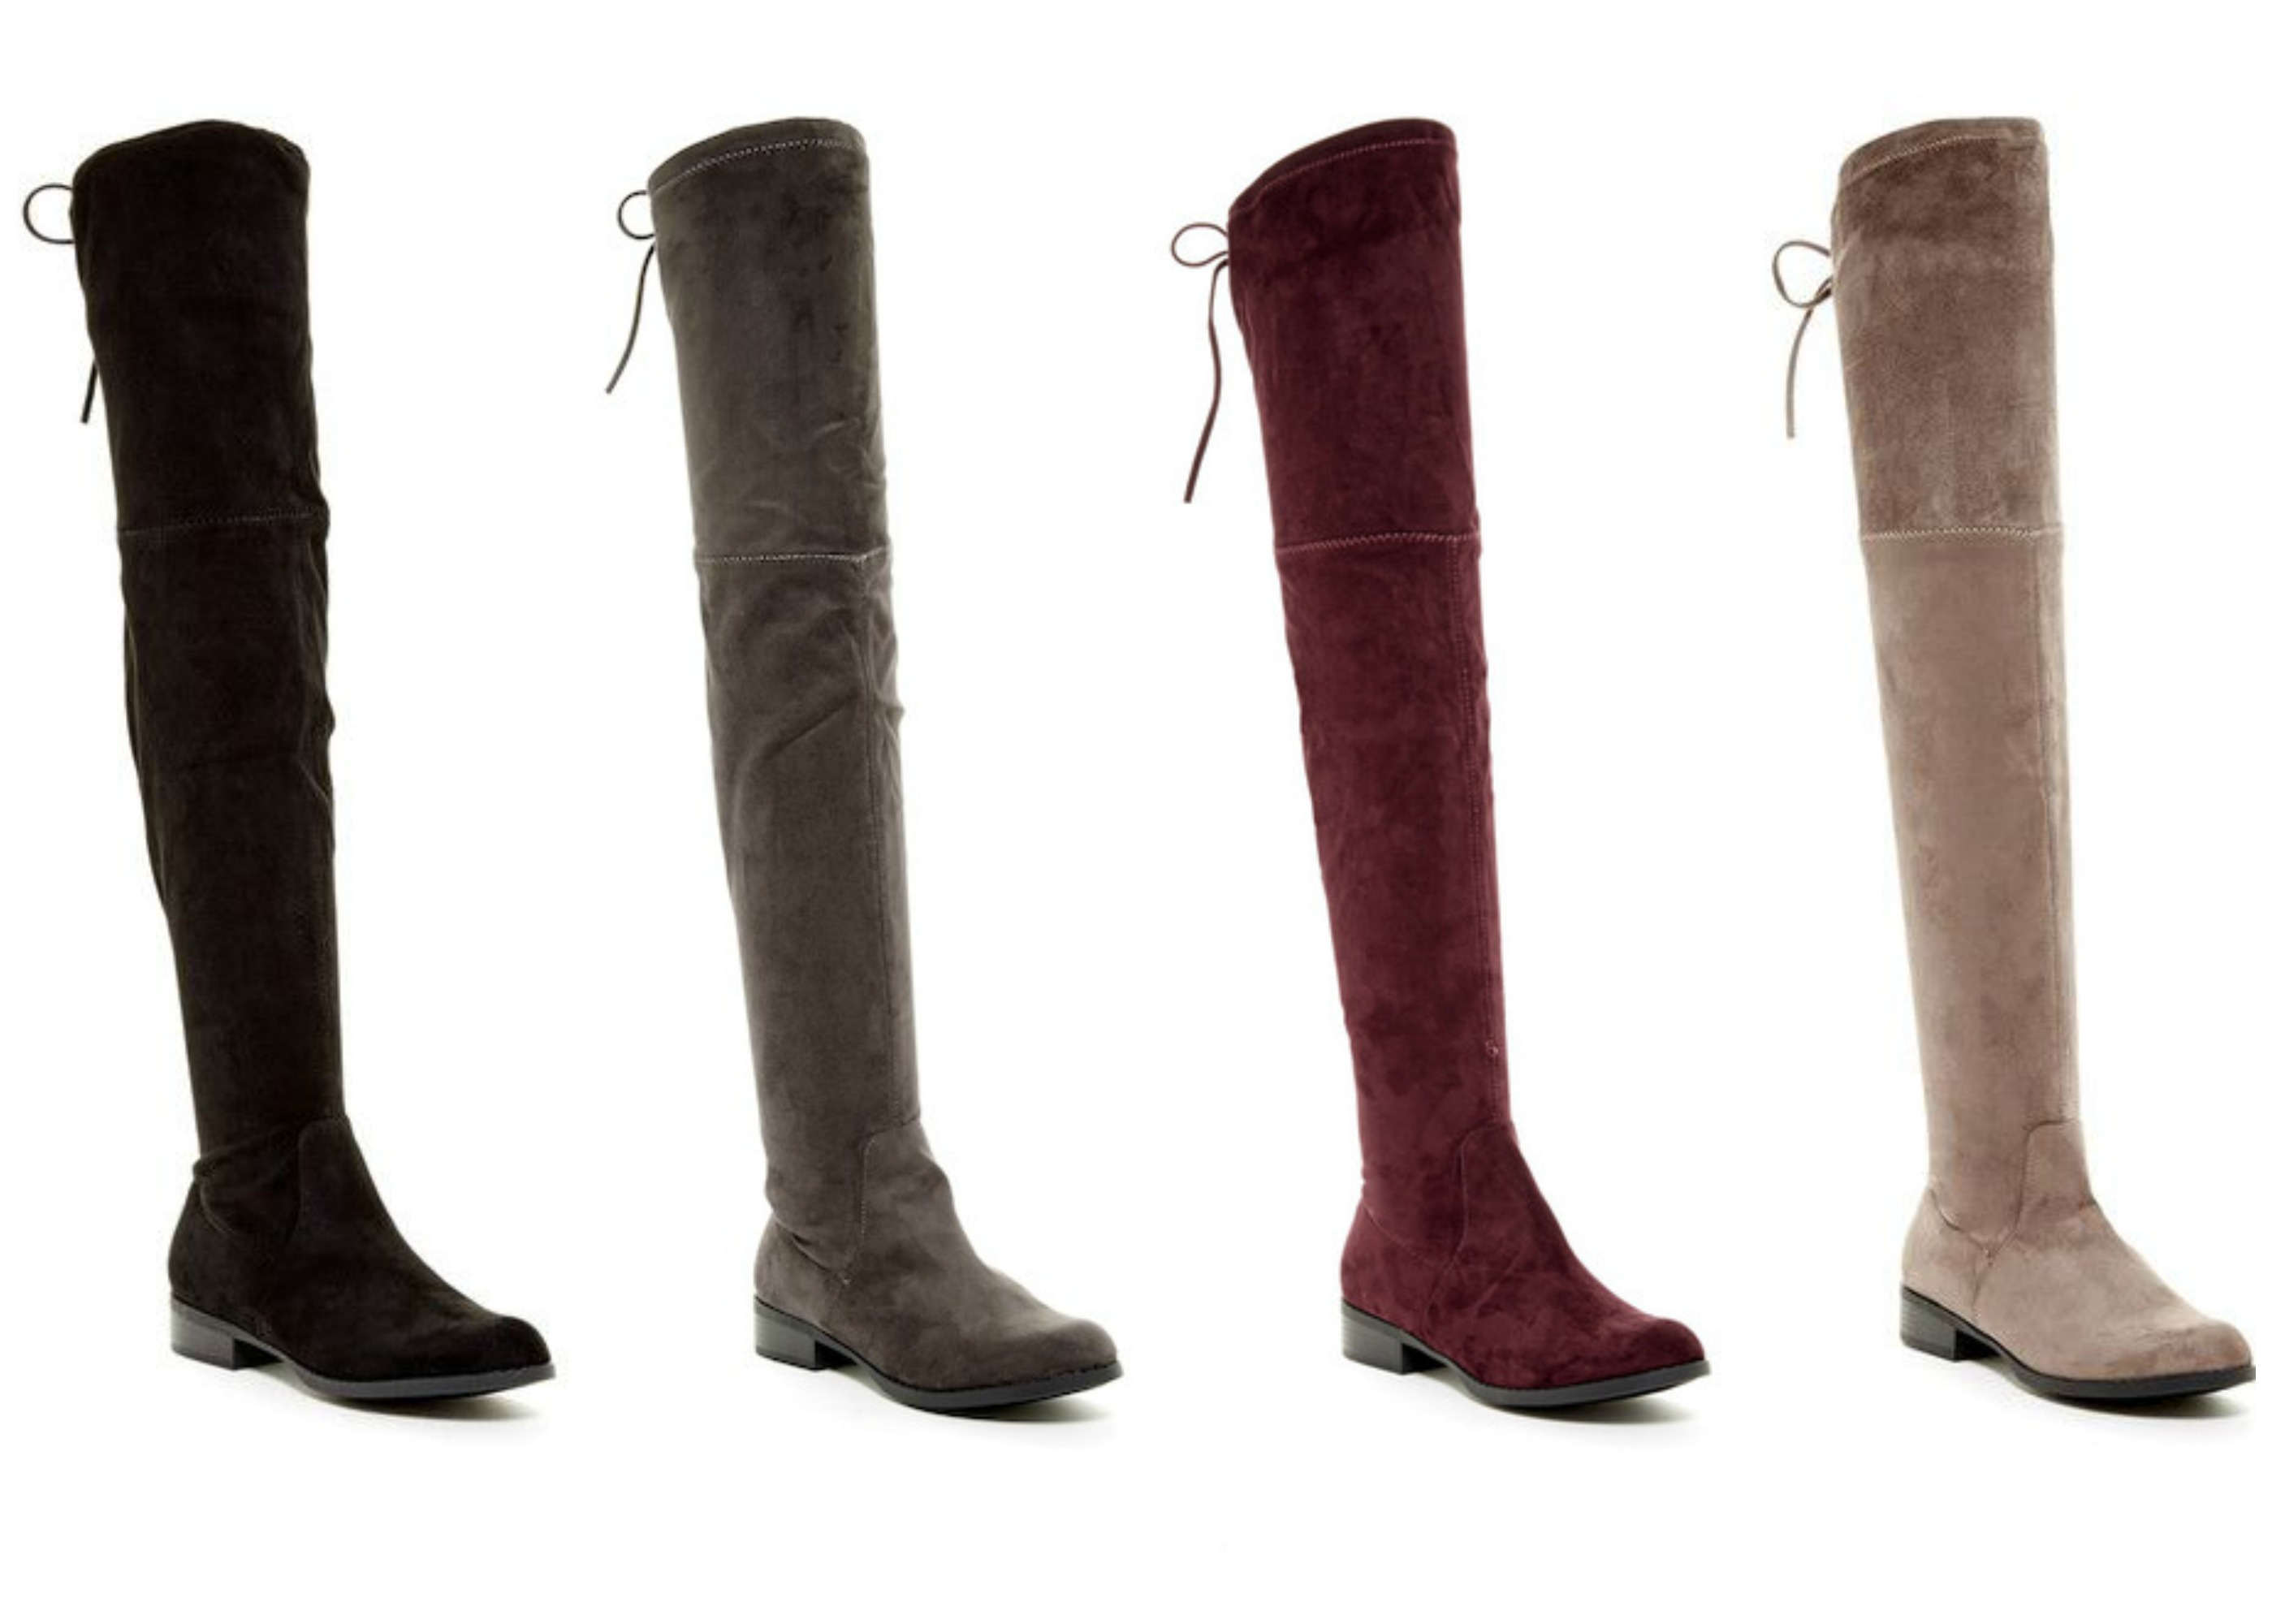 :: Wish List Wednesday : Designer Knock-Off OTK Boots + Shopbop Sale  ::